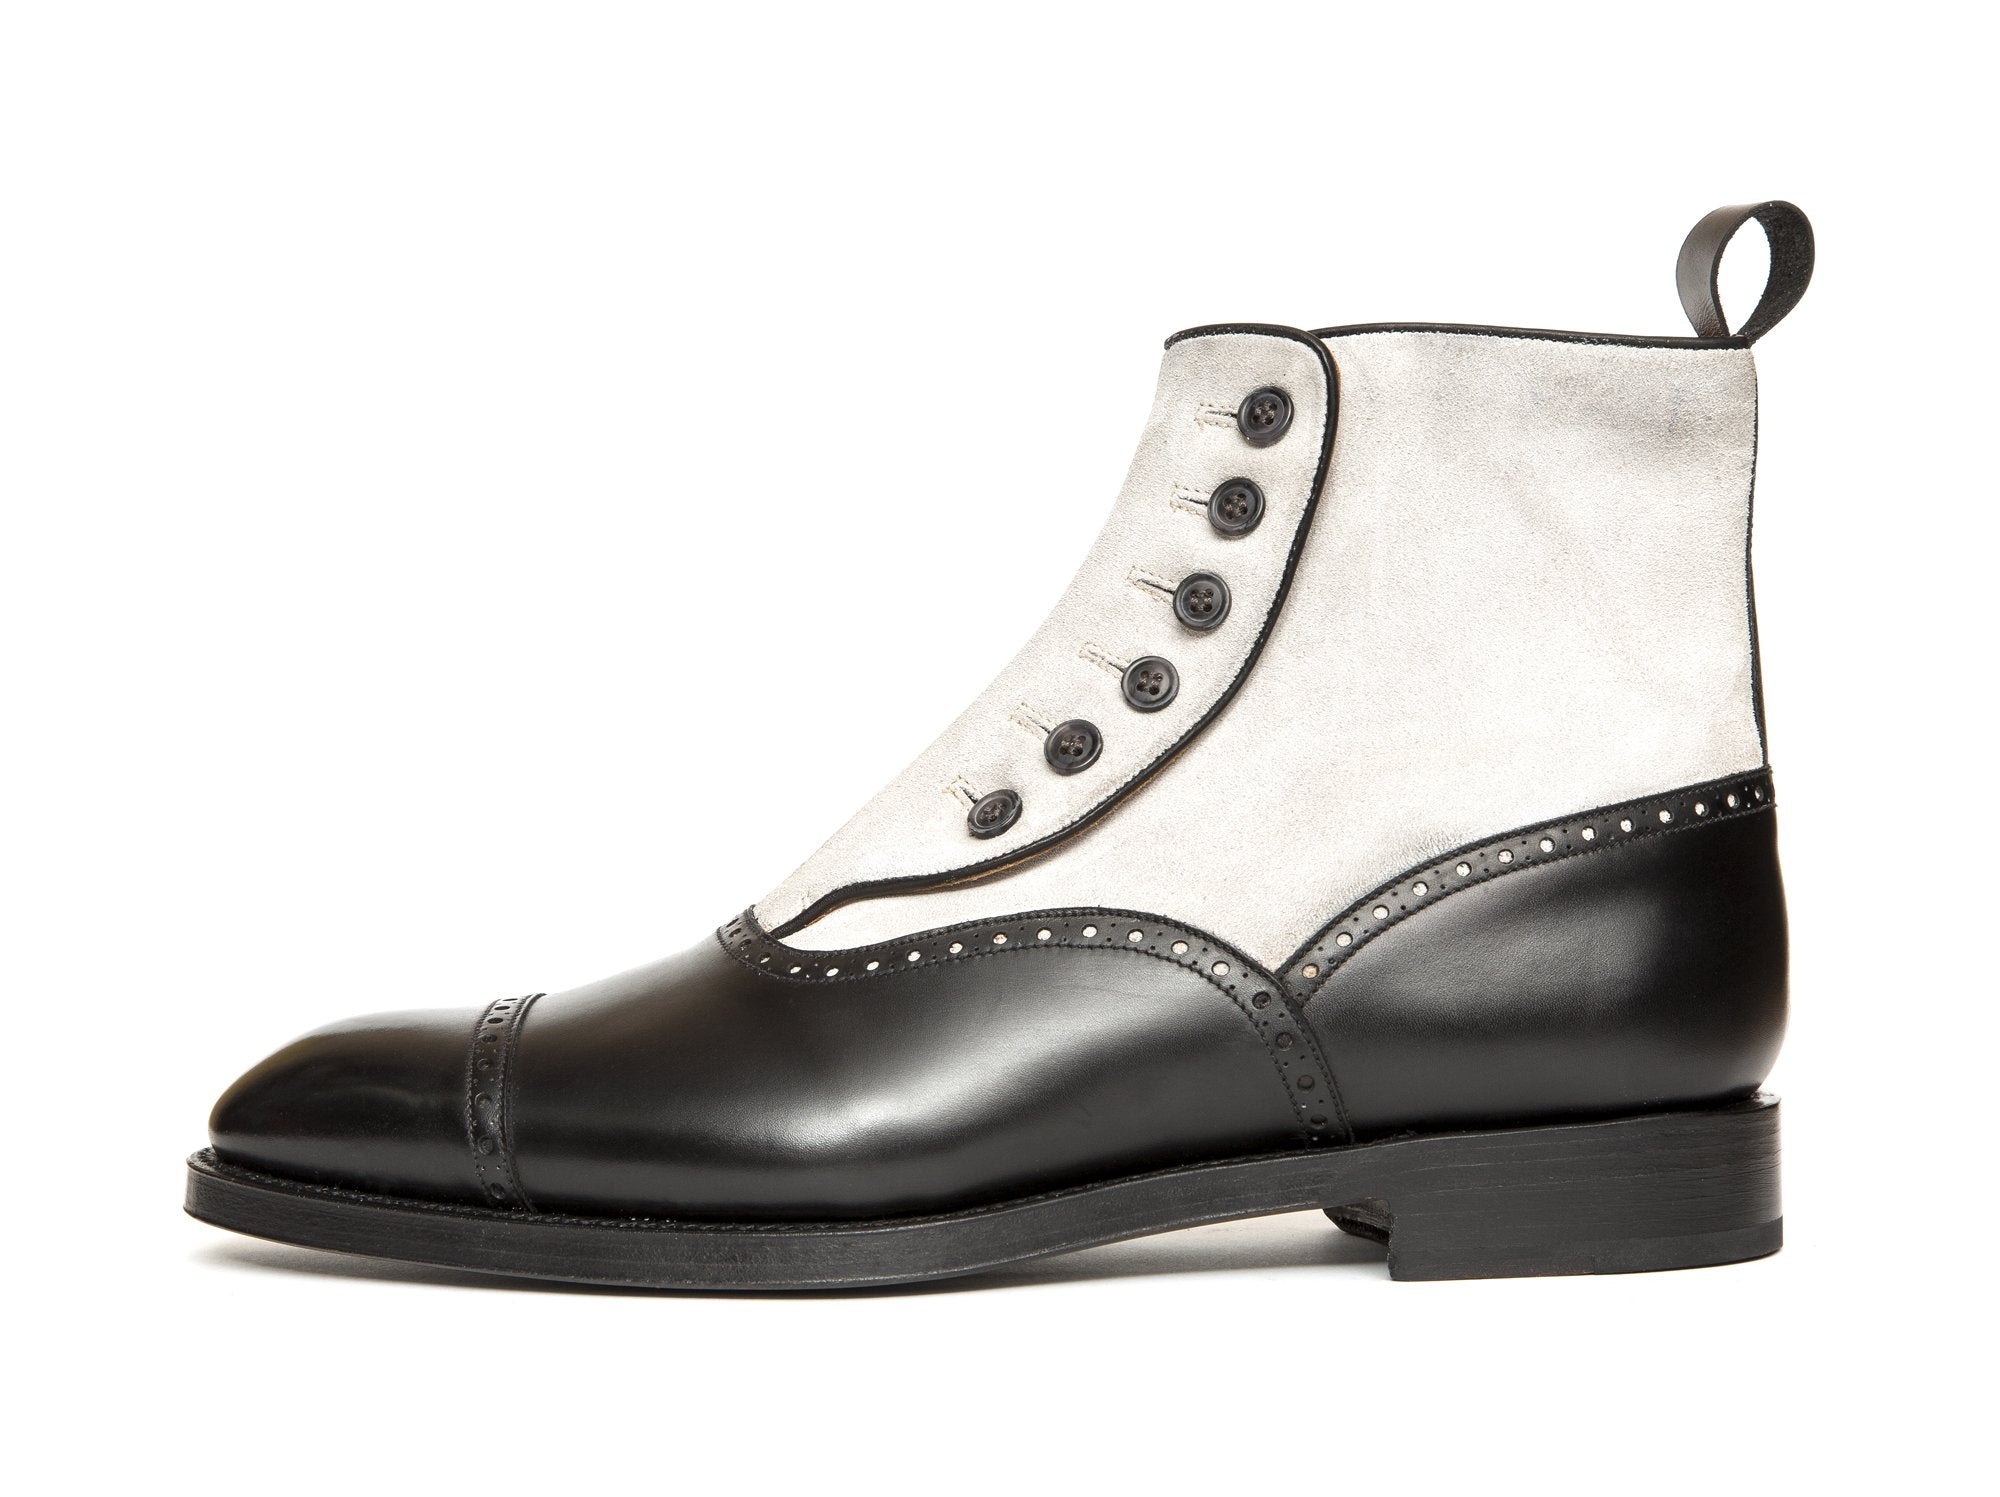 J.FitzPatrick Footwear - Carkeek - Black Calf / Light Grey Suede - NGT last - Double Leather Sole